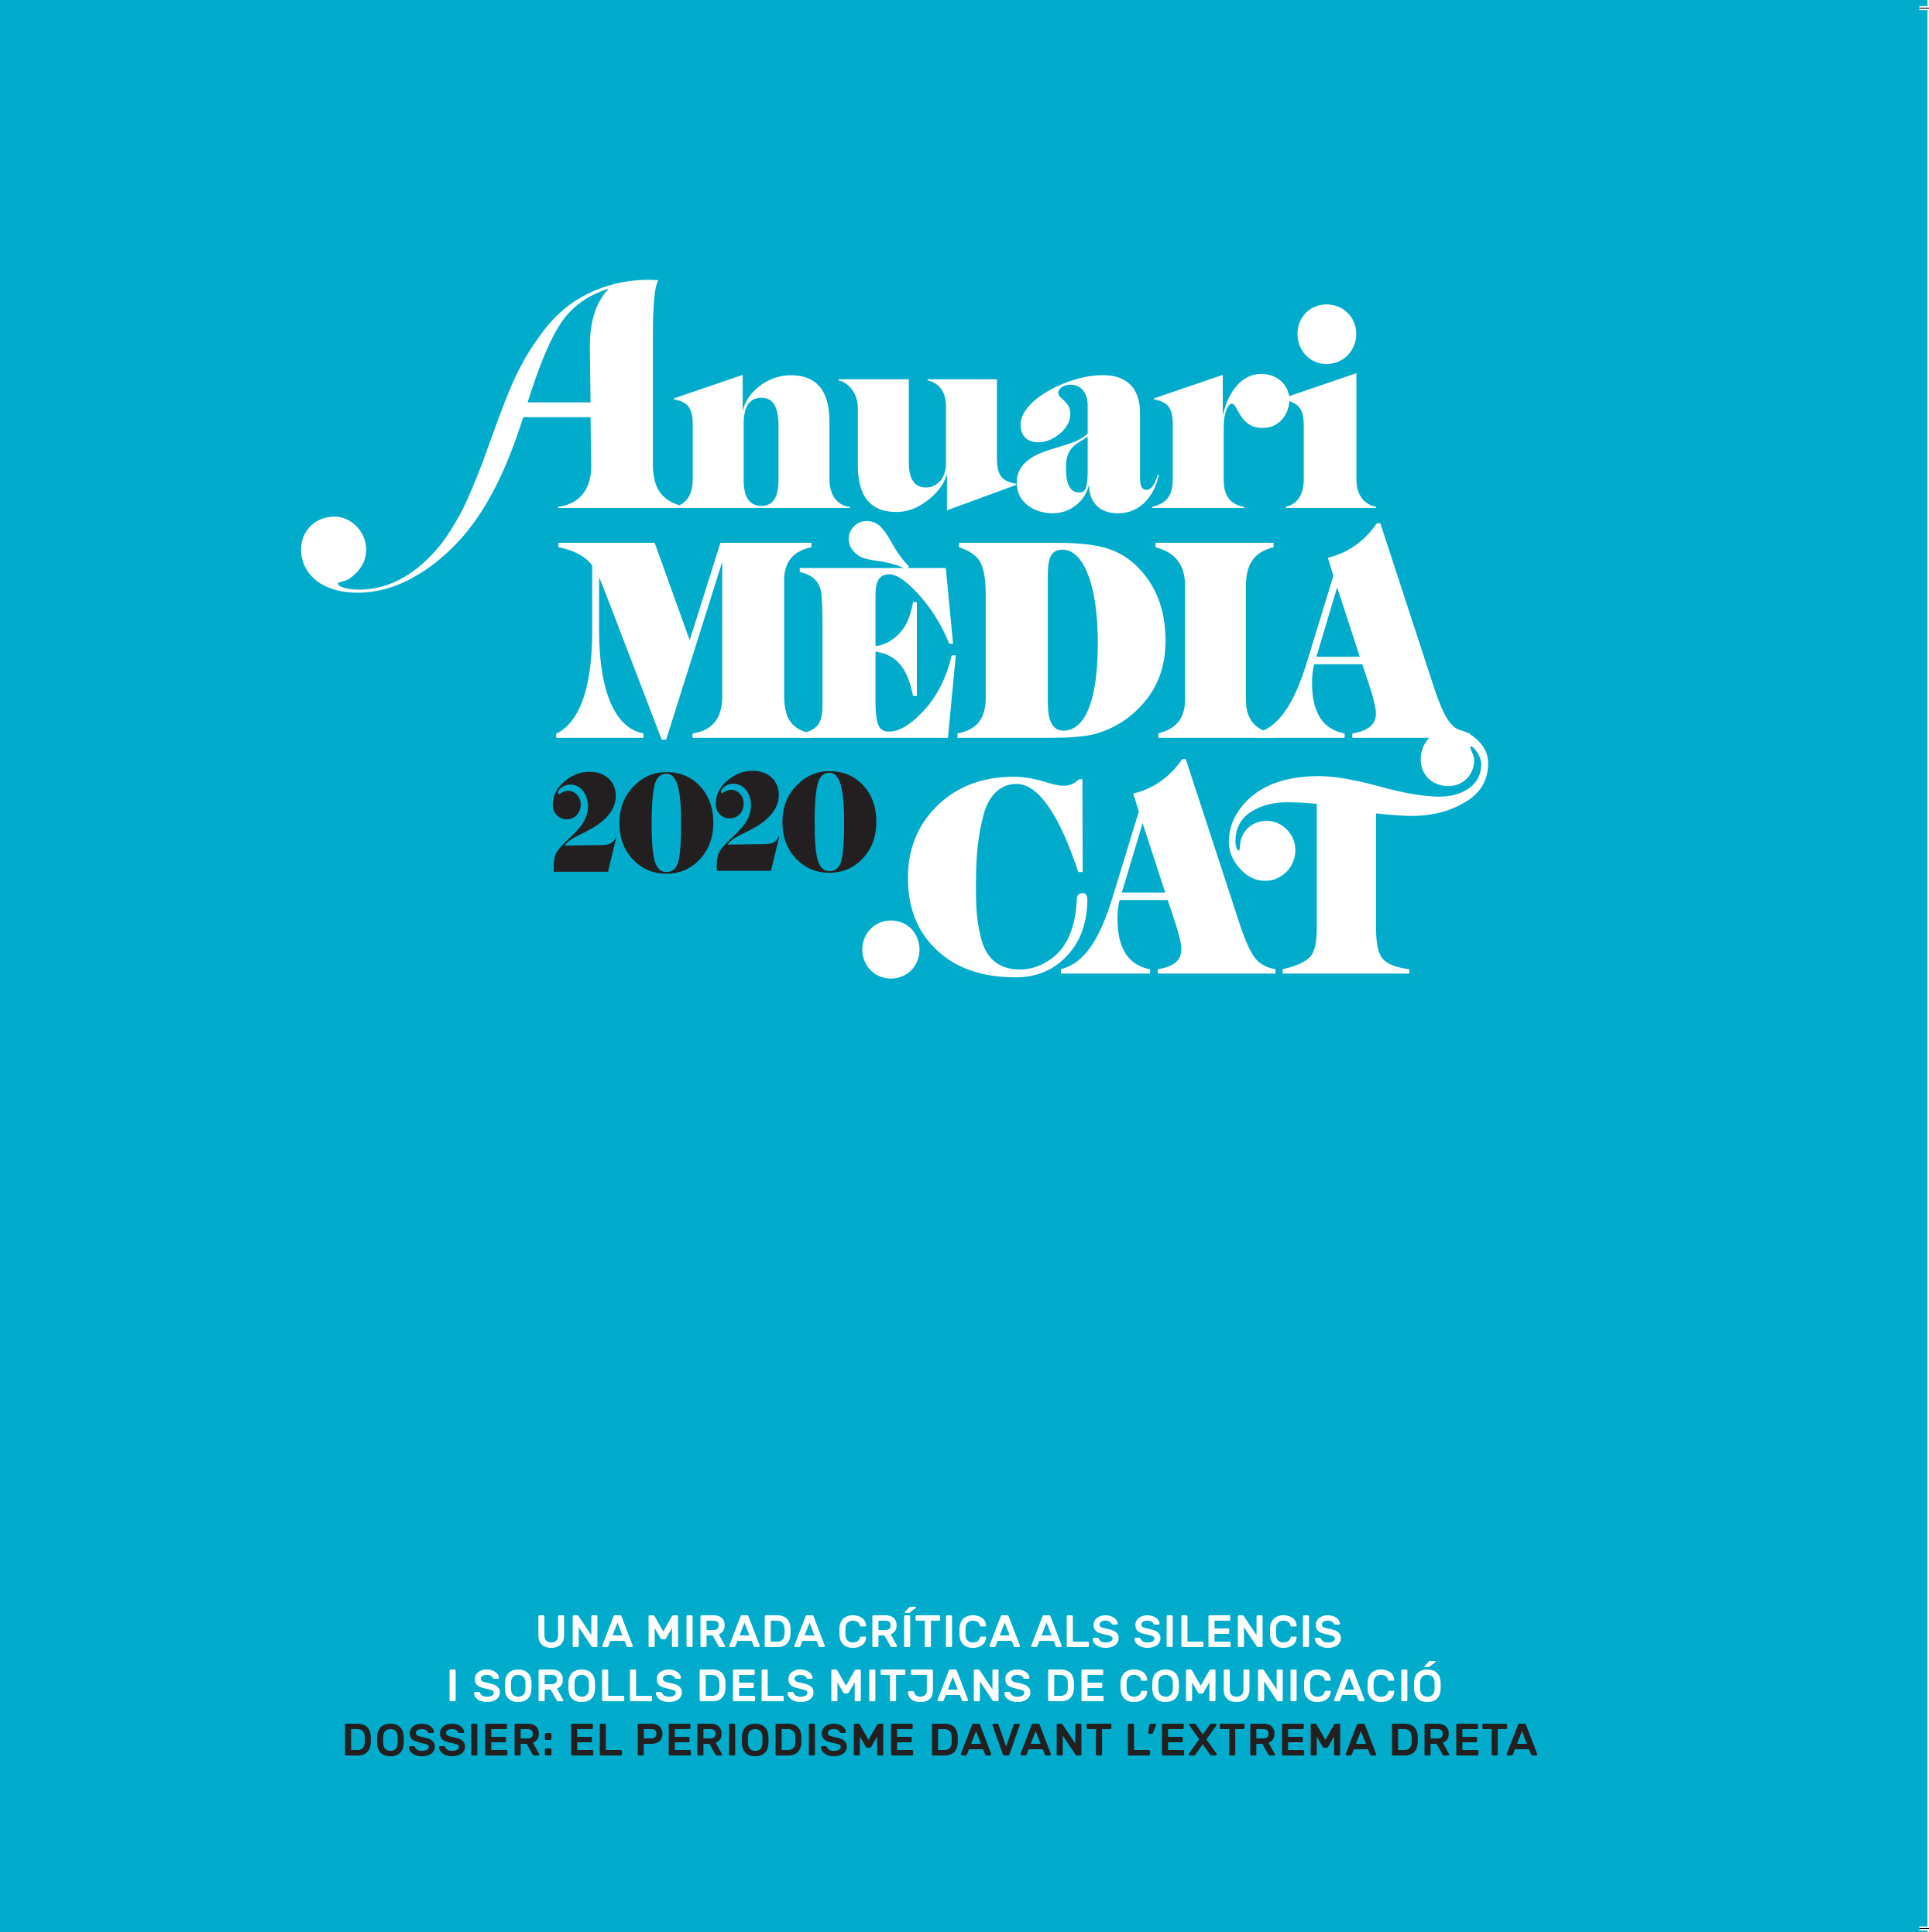 anuari-media-cat-2020-9788418580130